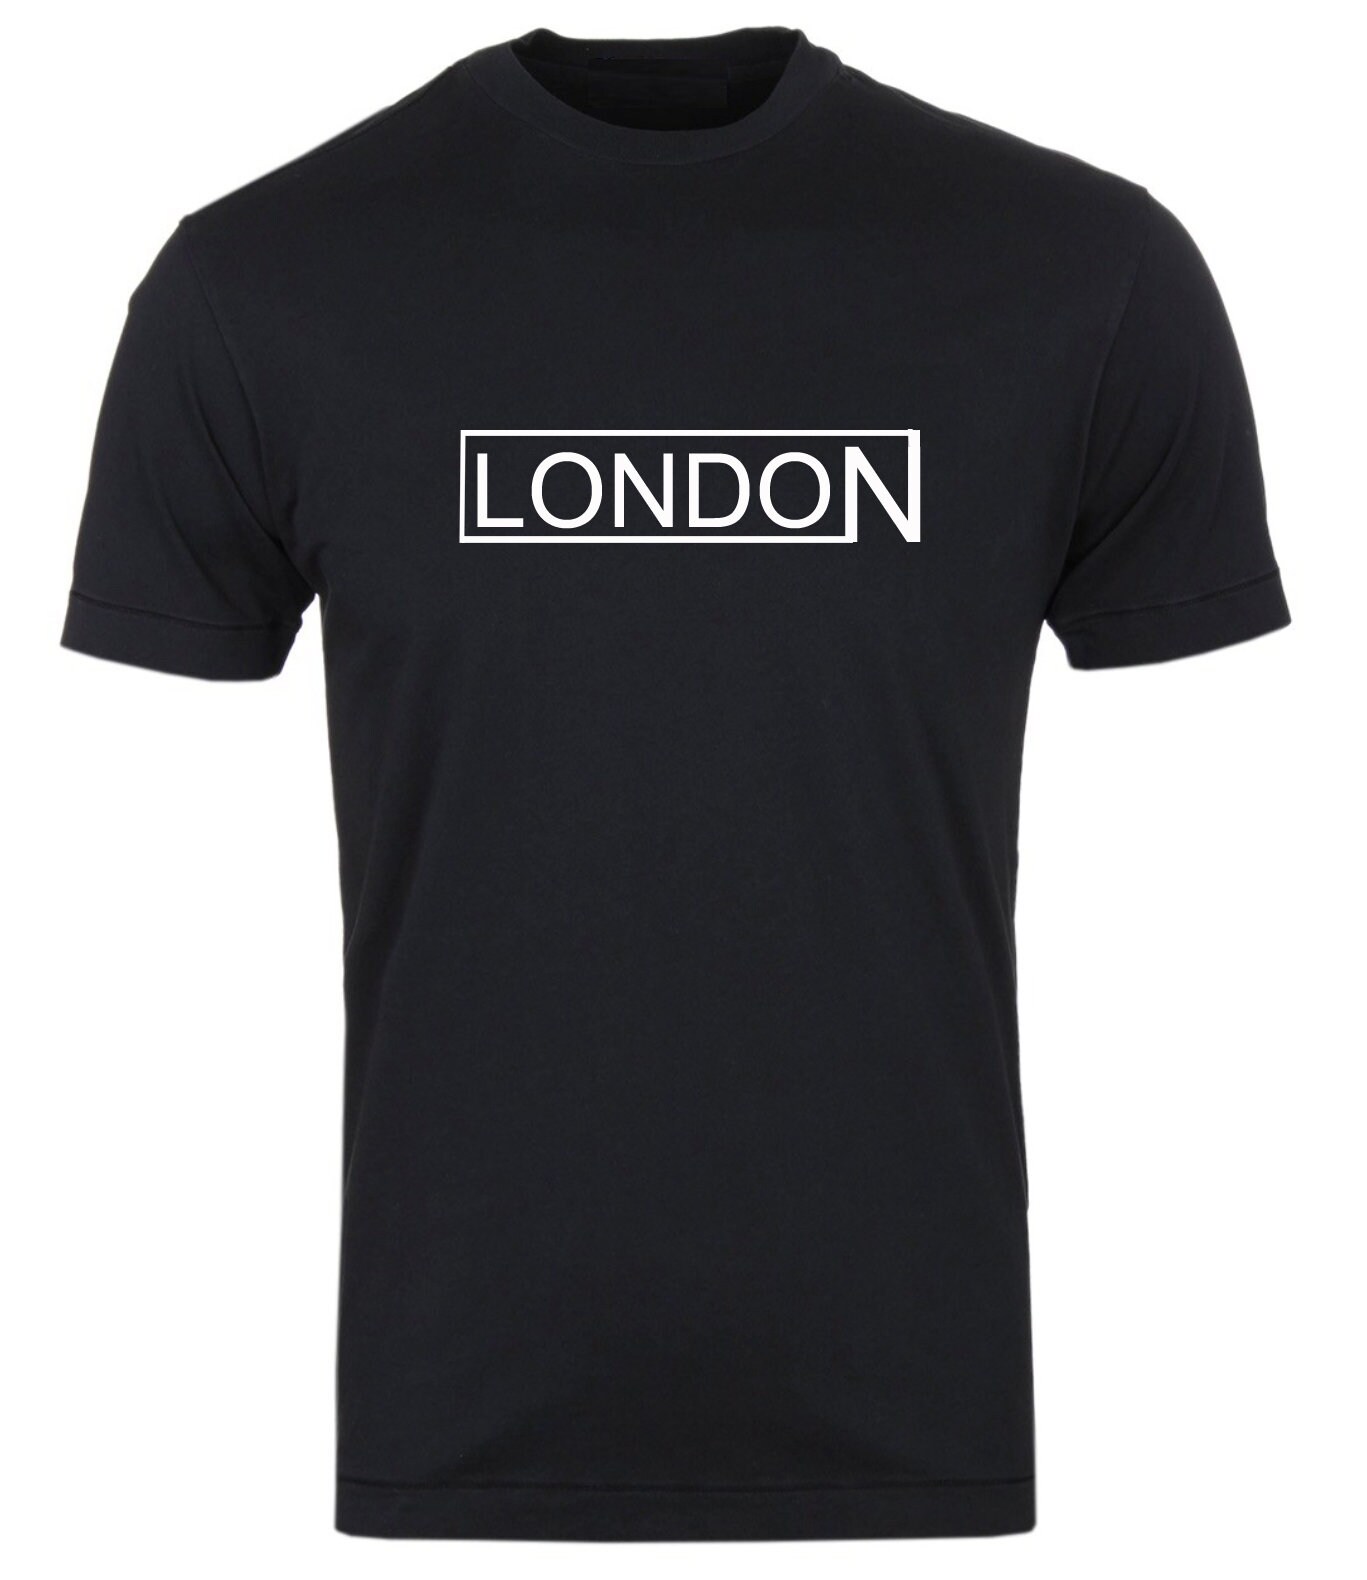 London T-shirt Union Jack England Printed Souvenir Kids Unisex Graphic Gift 